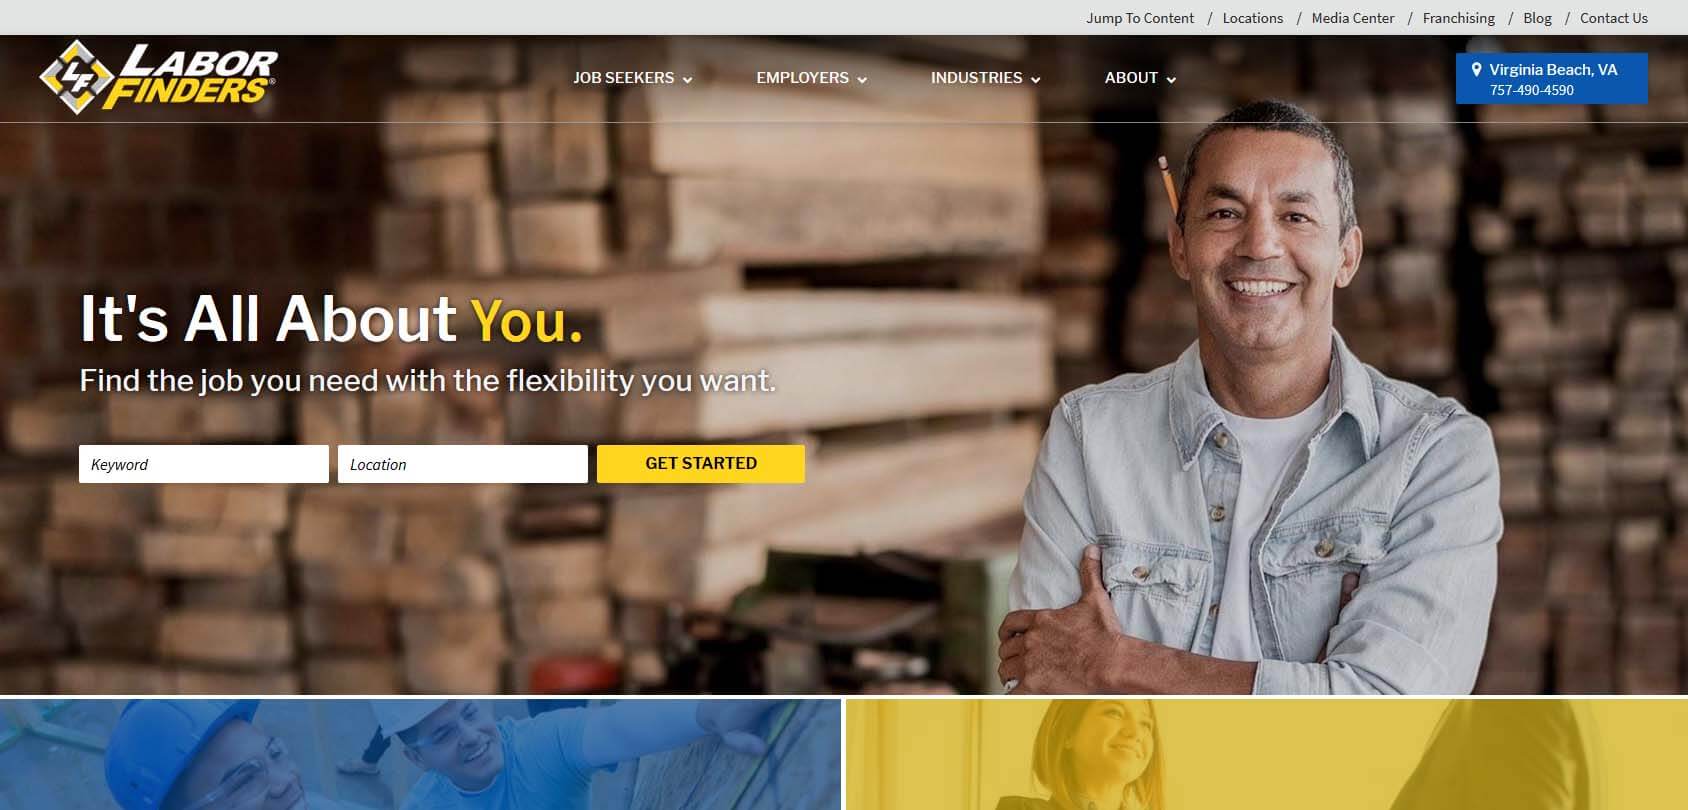 Labor Finders Homepage